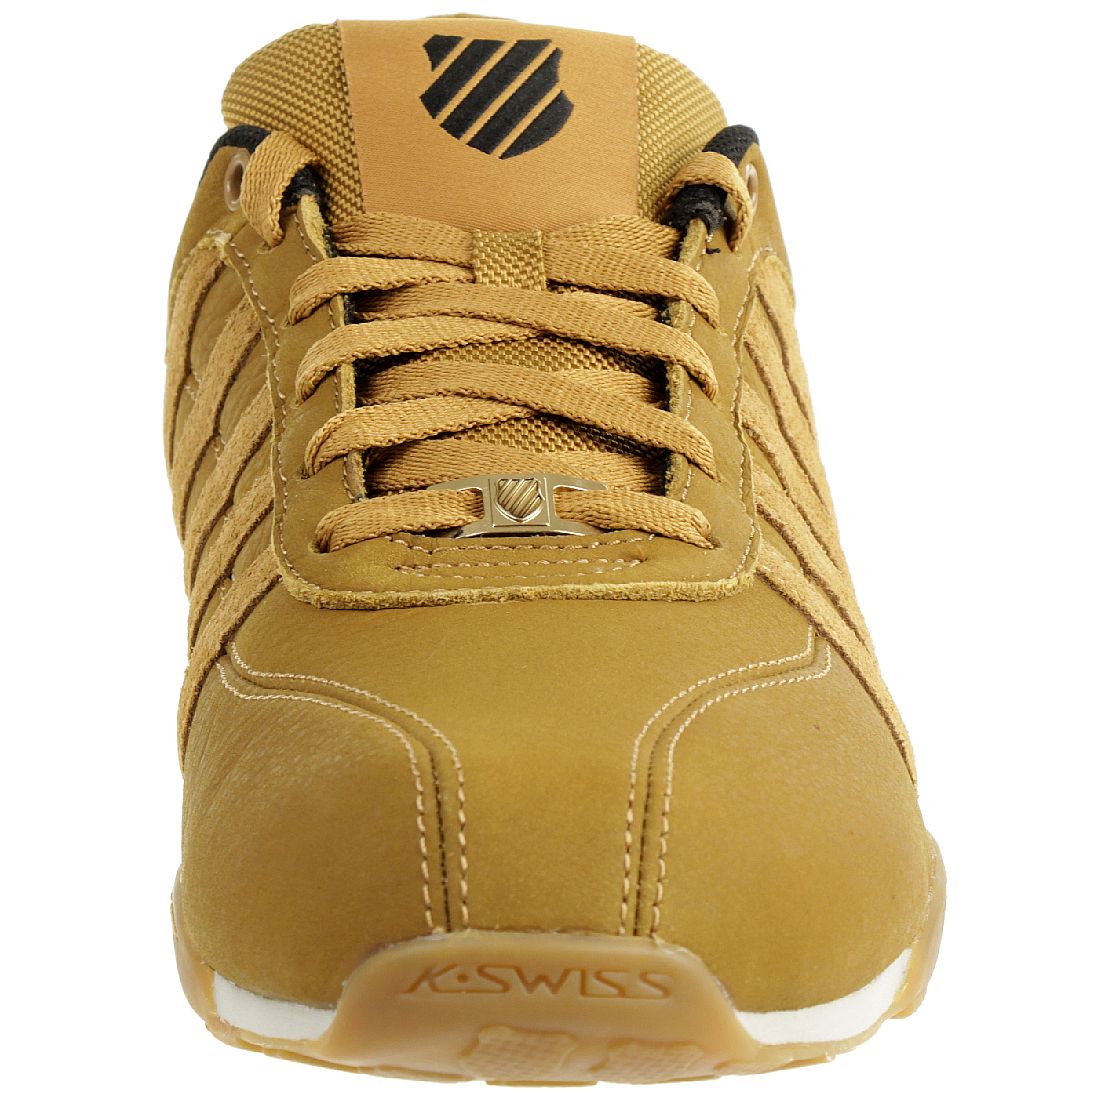 K-SWISS Arvee 1.5 Schuhe Sneaker braun Leder 02453-219-M